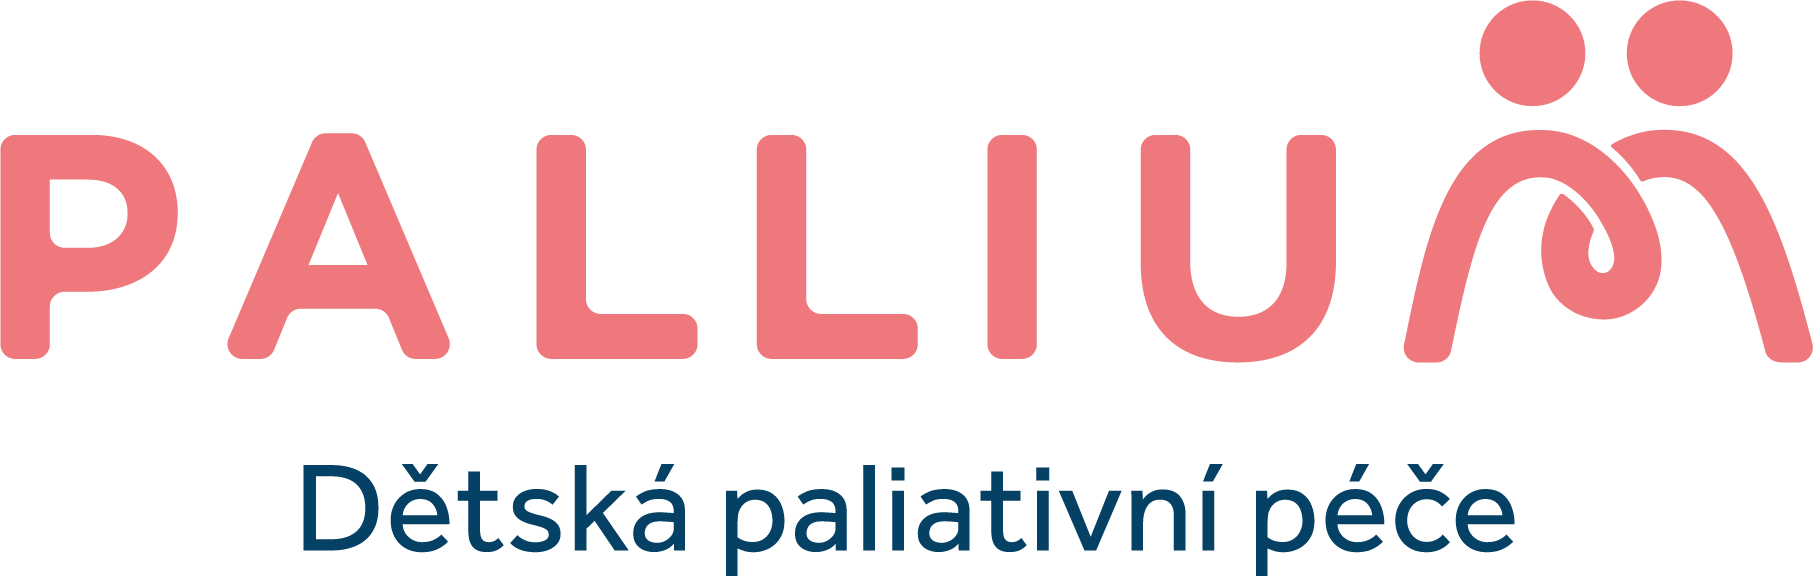 pallium-logo-barevne_slogan-stred.png